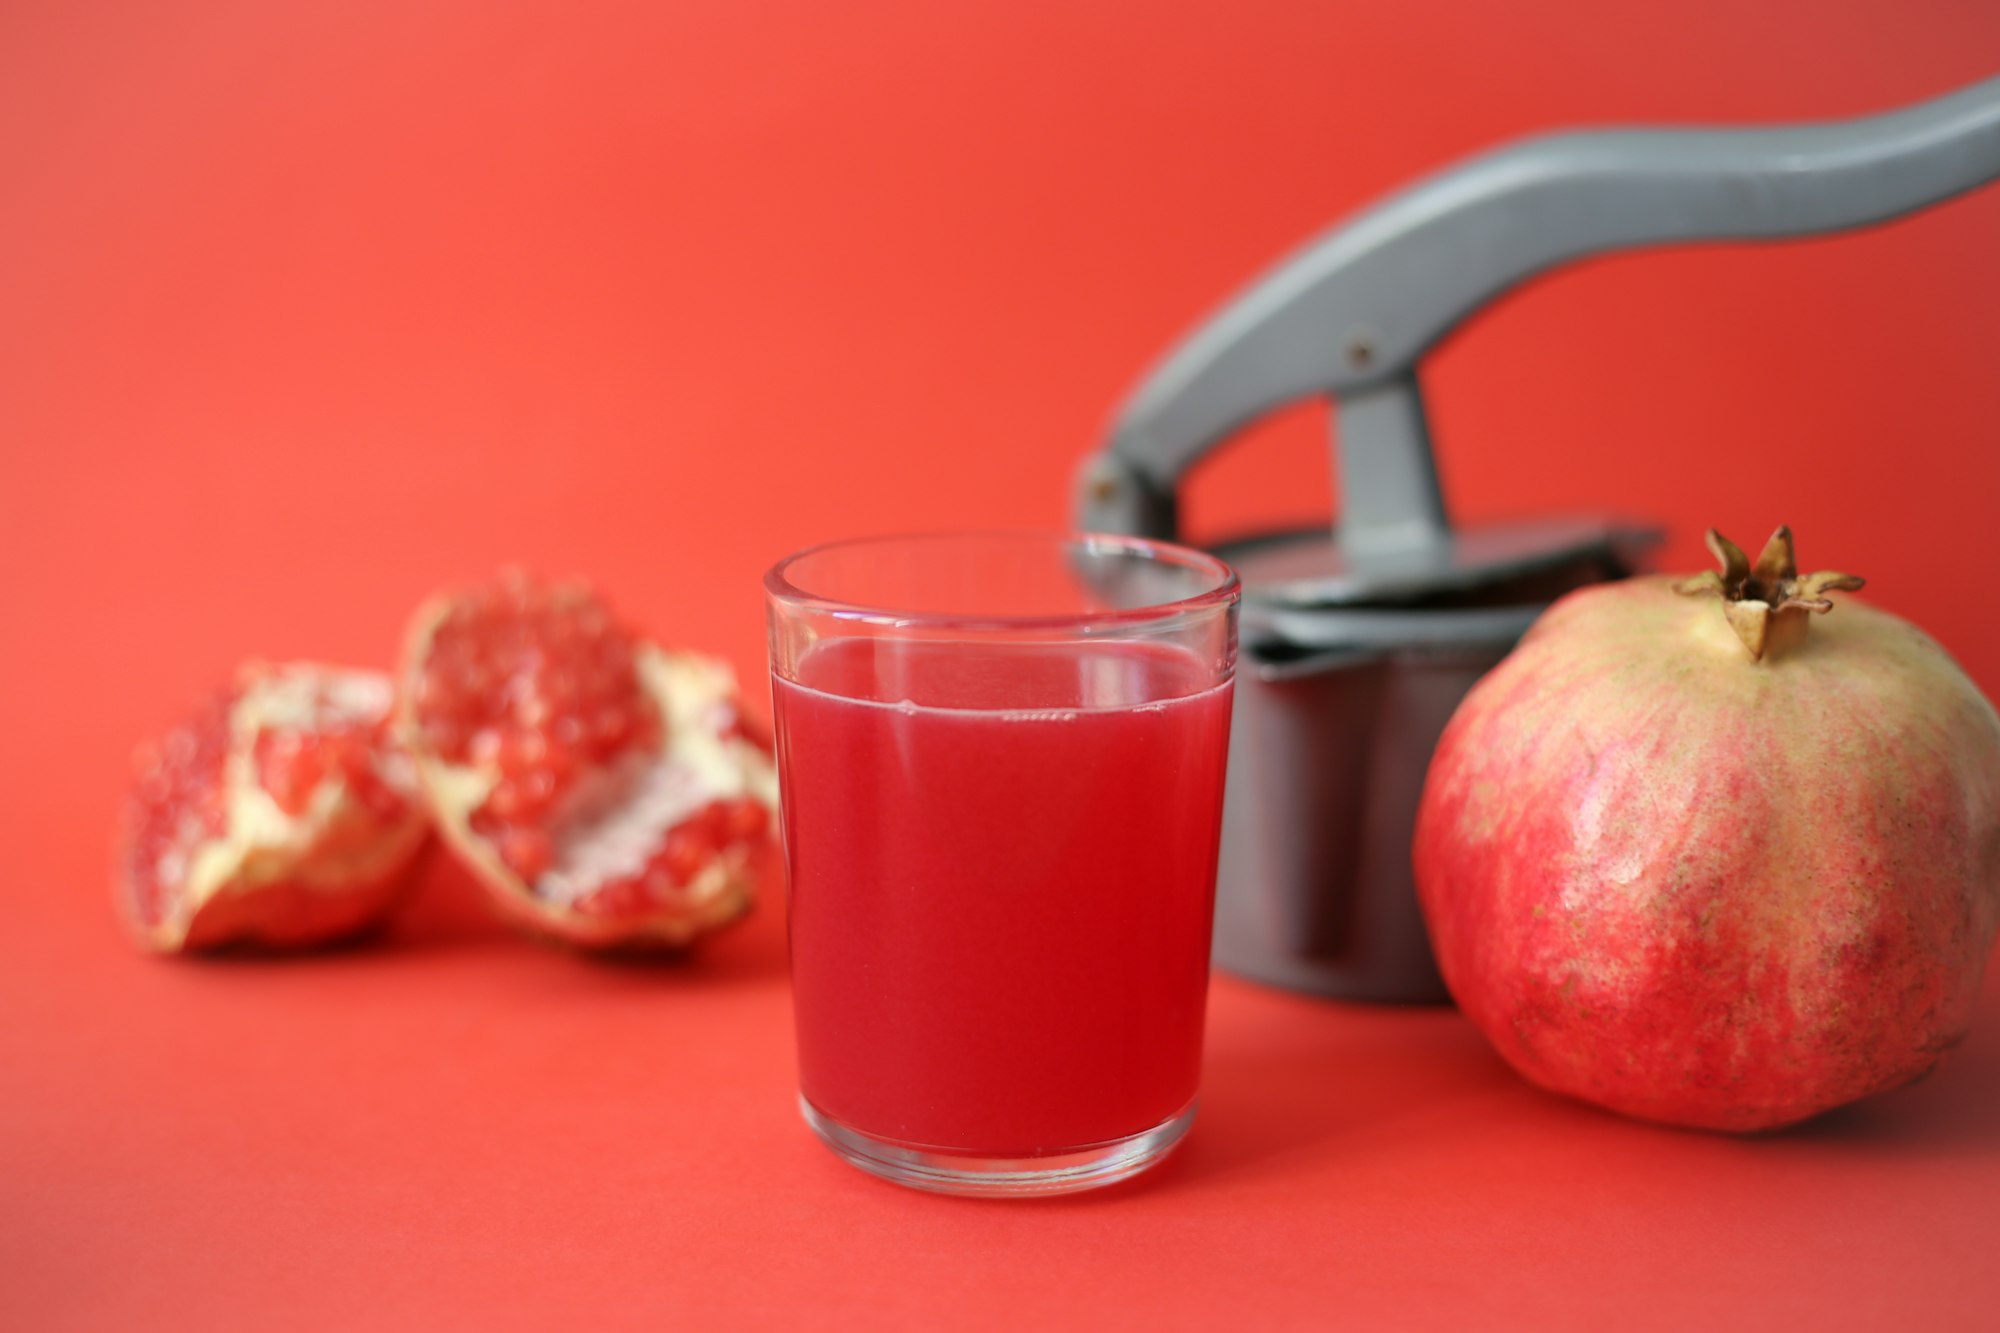 Making pomegranate juice